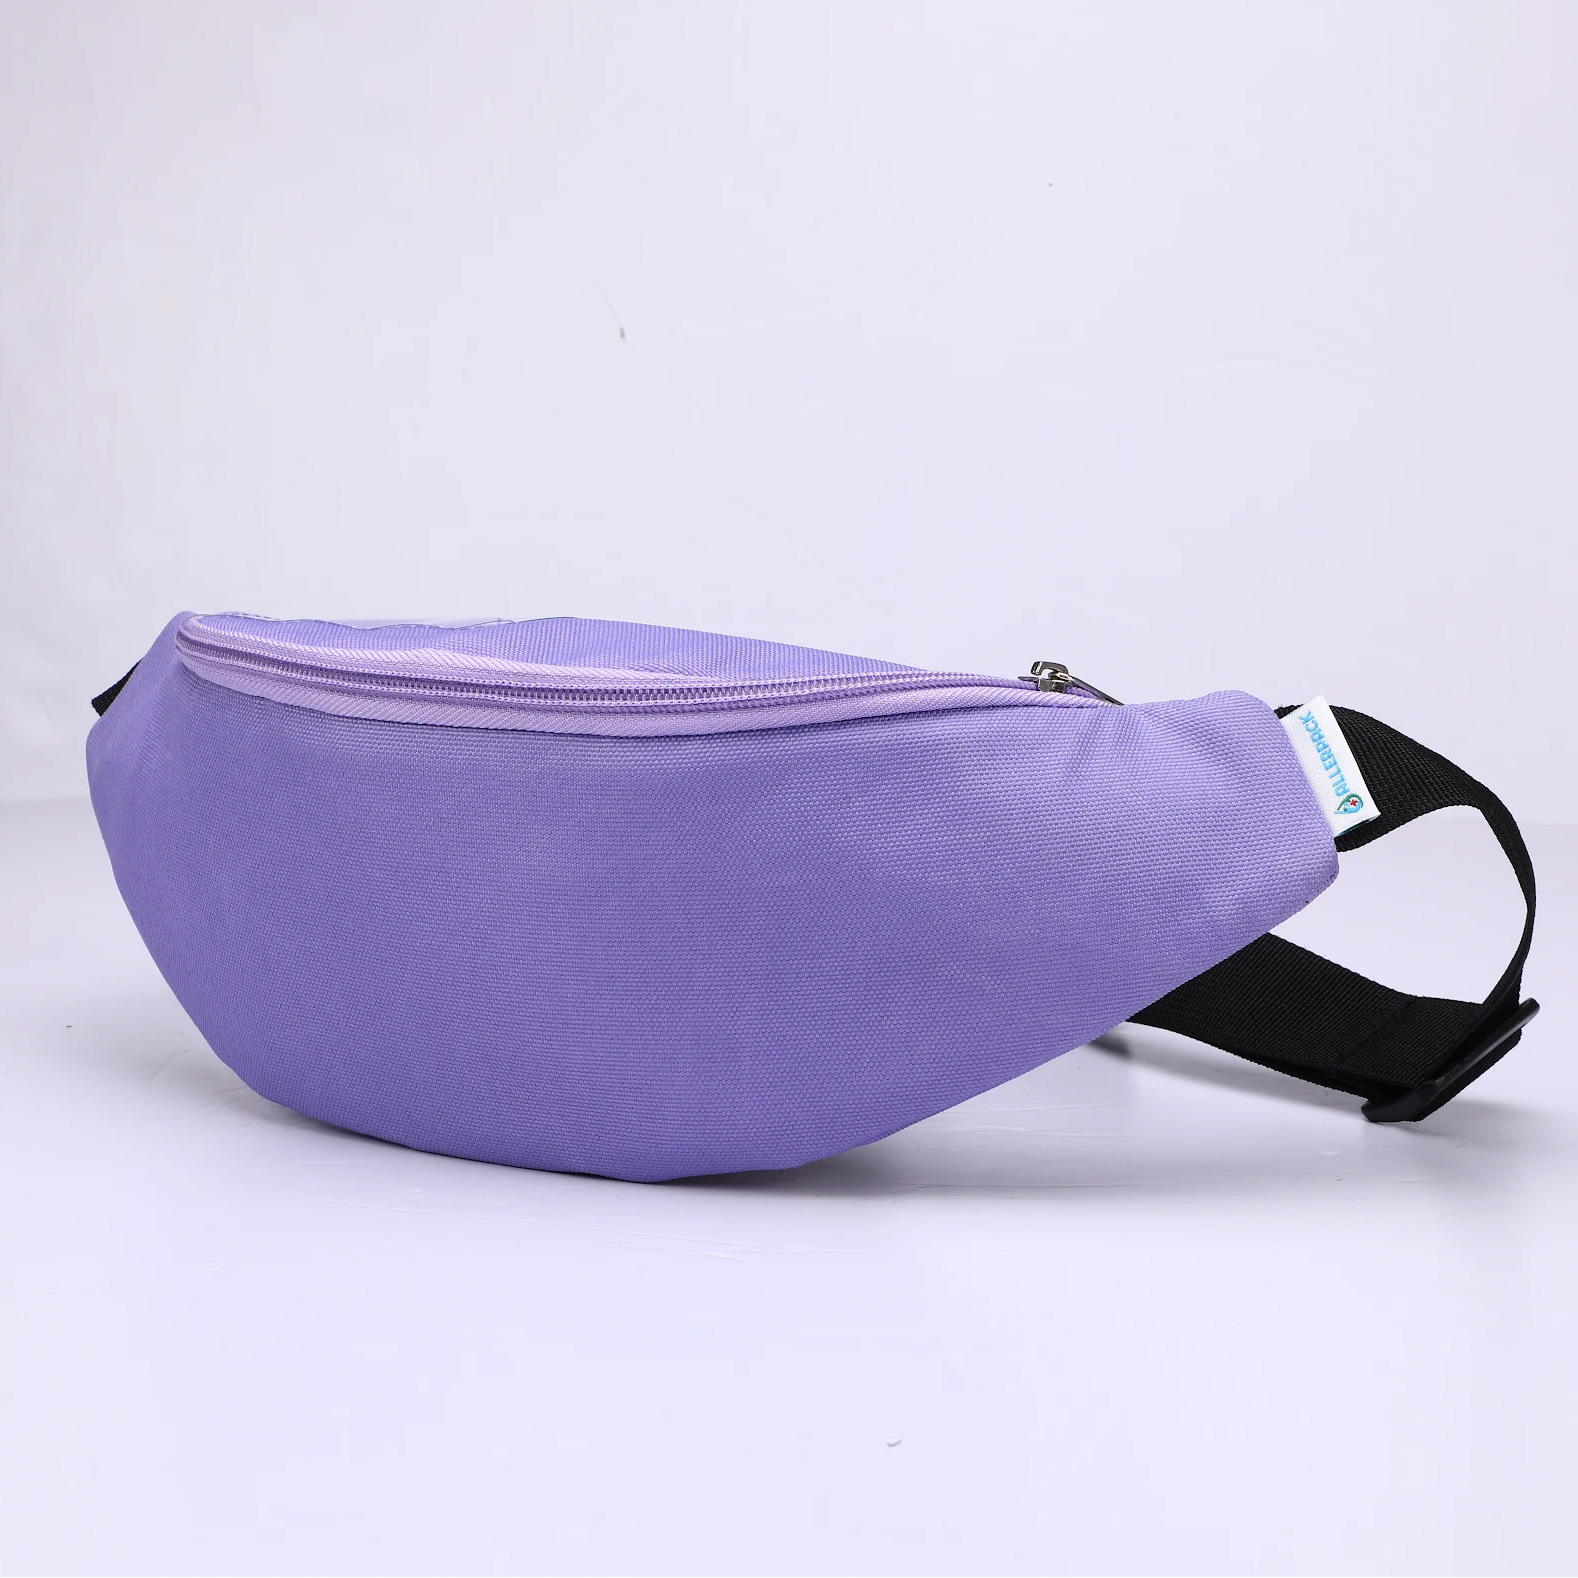 Insulated Medical Bum Bag - Allerpack